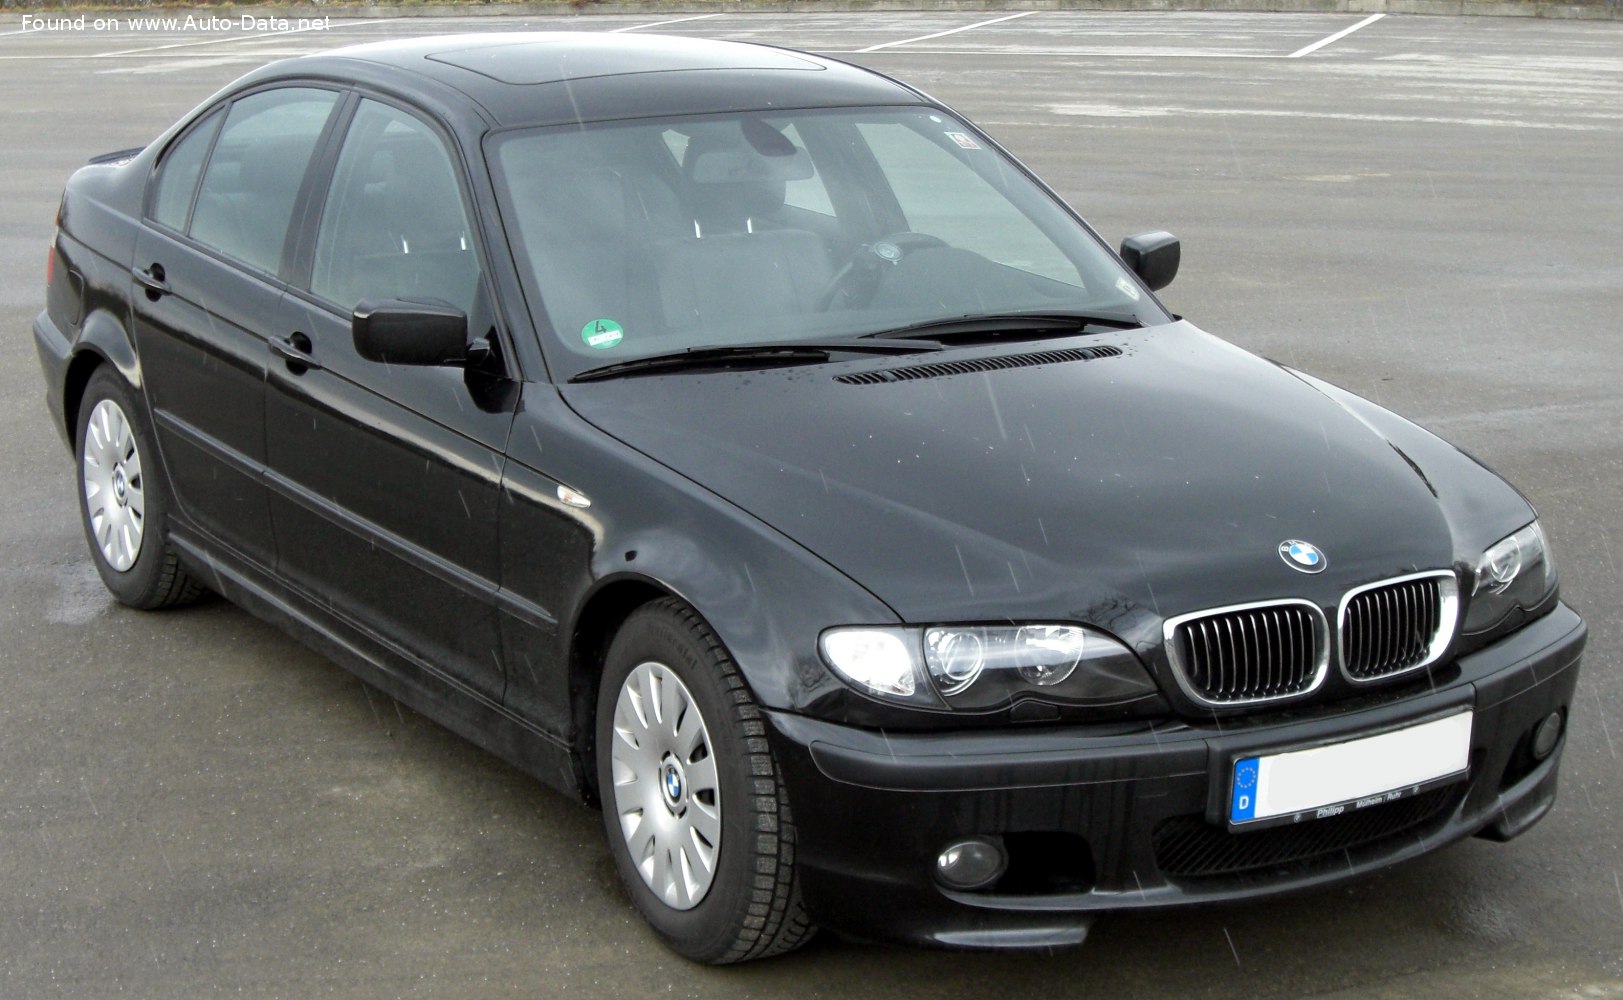 respuesta acero nacimiento 2001 BMW 3 Series Sedan (E46, facelift 2001) 320d (150 Hp) | Technical  specs, data, fuel consumption, Dimensions